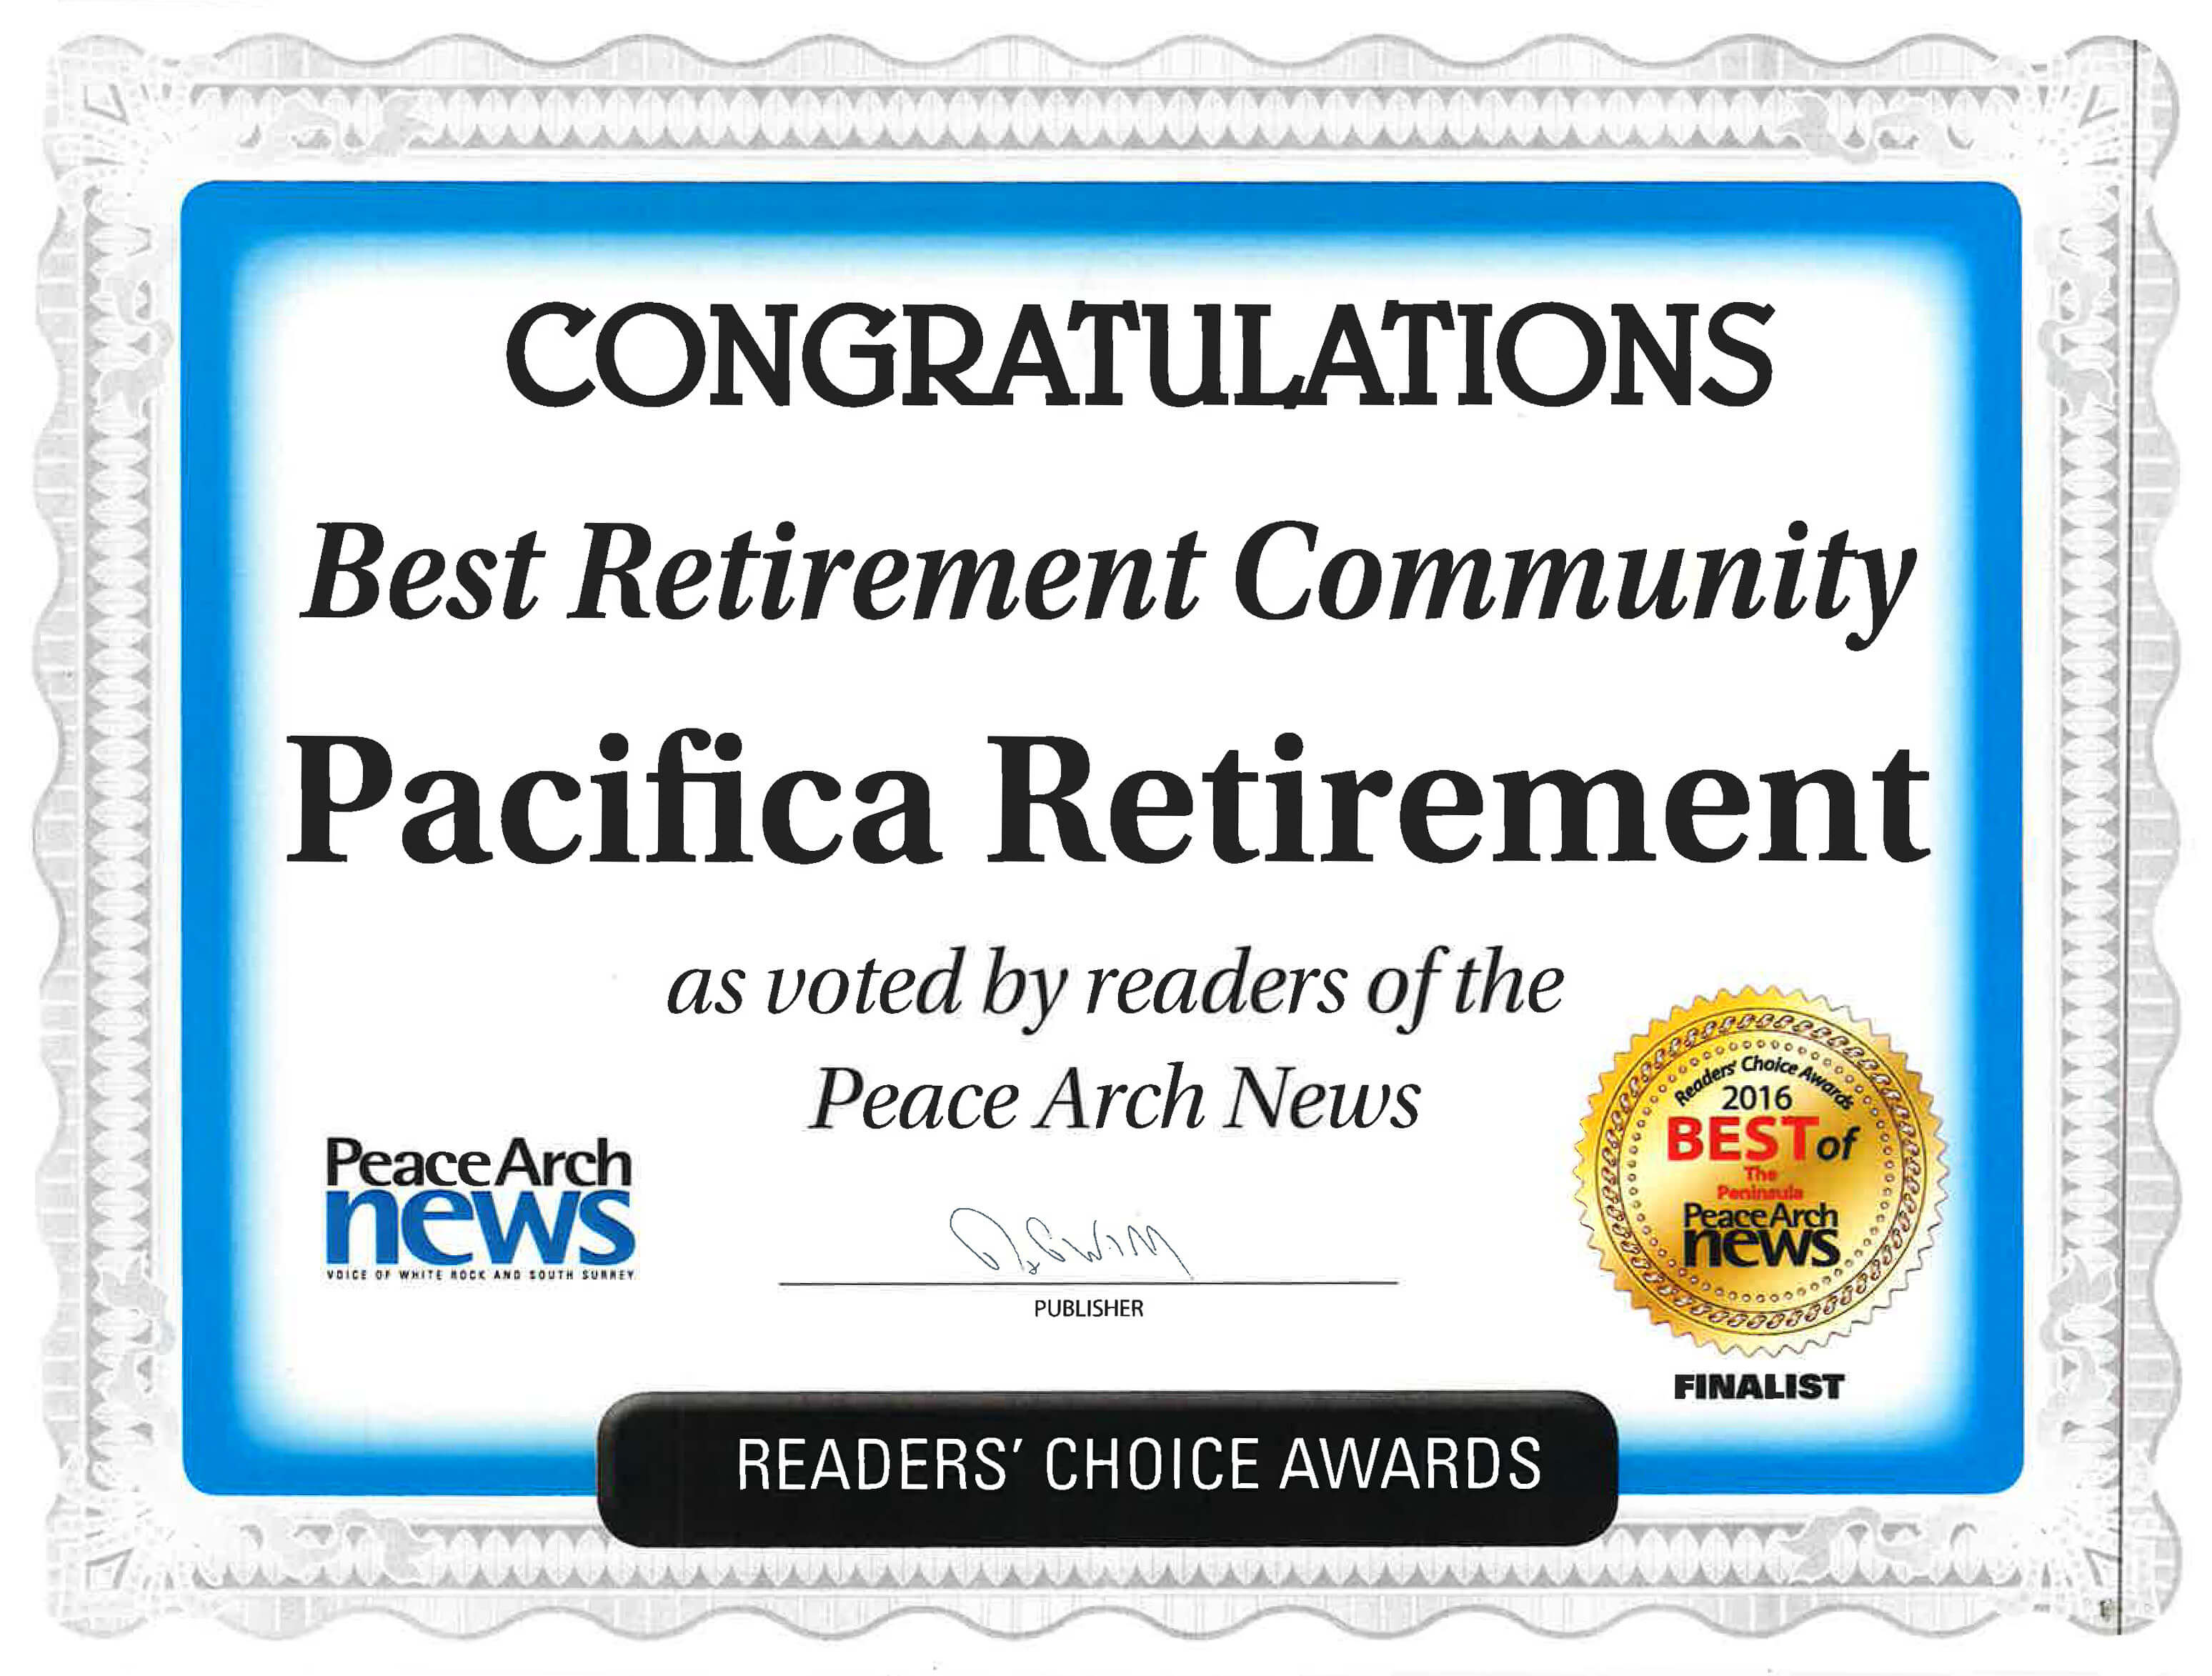 Best Retirement Community Award